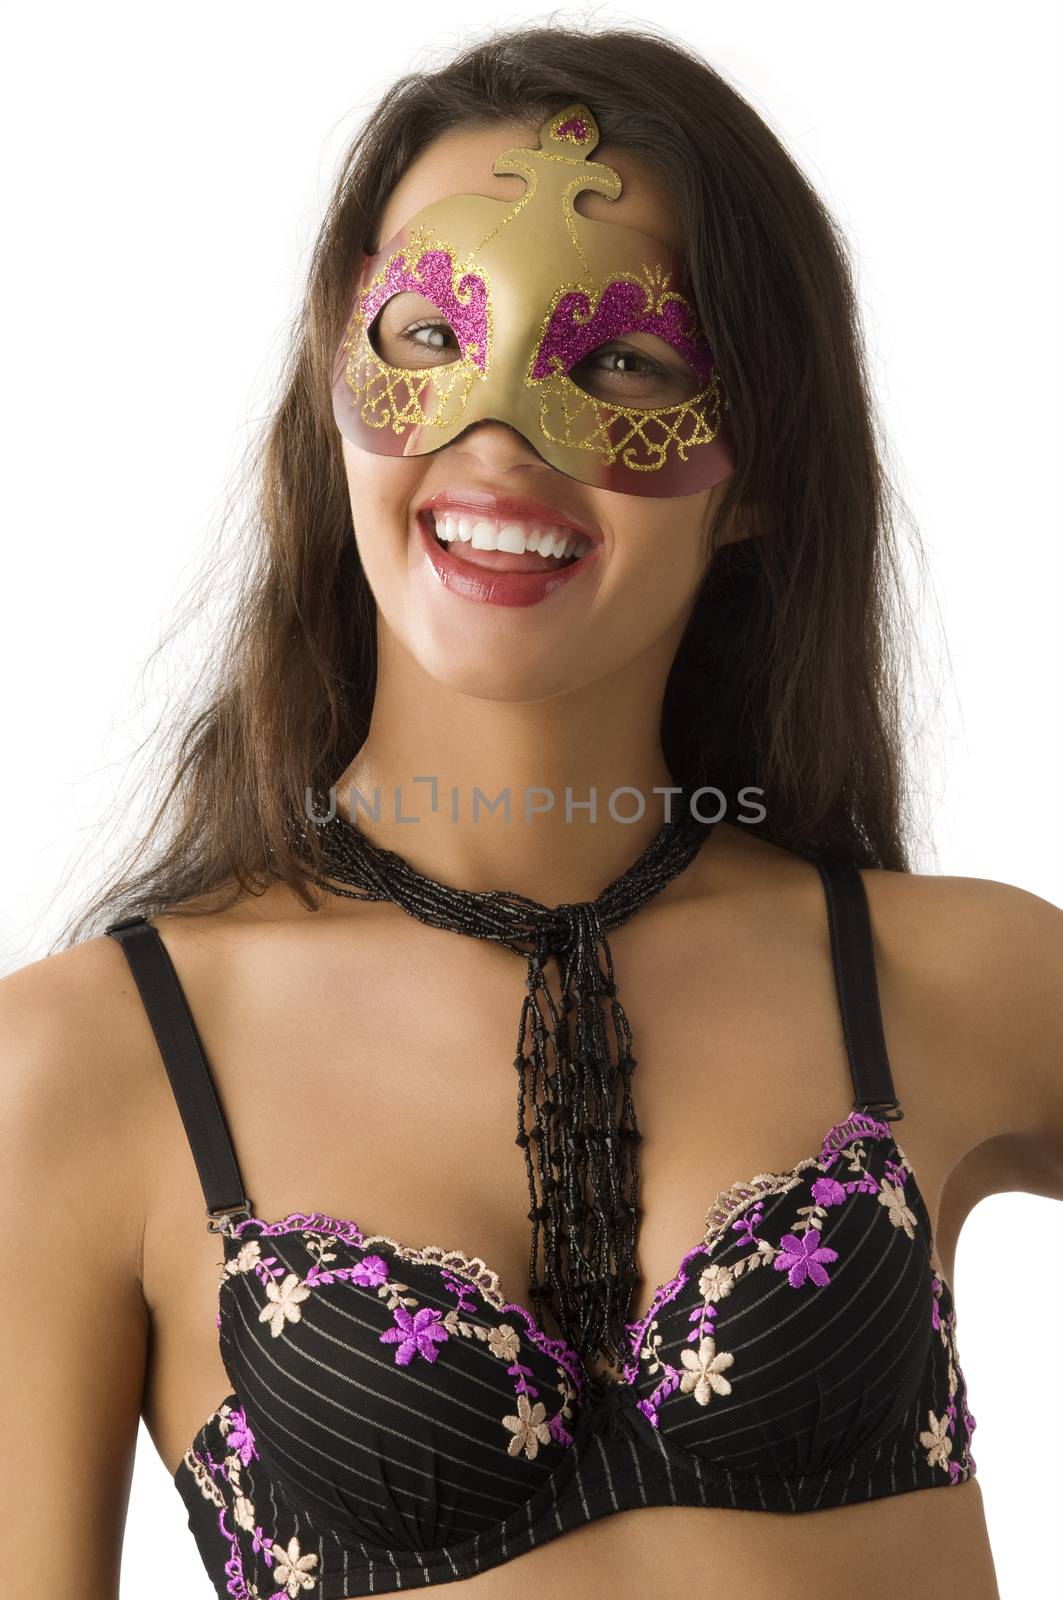 carnival girl smiling by fotoCD